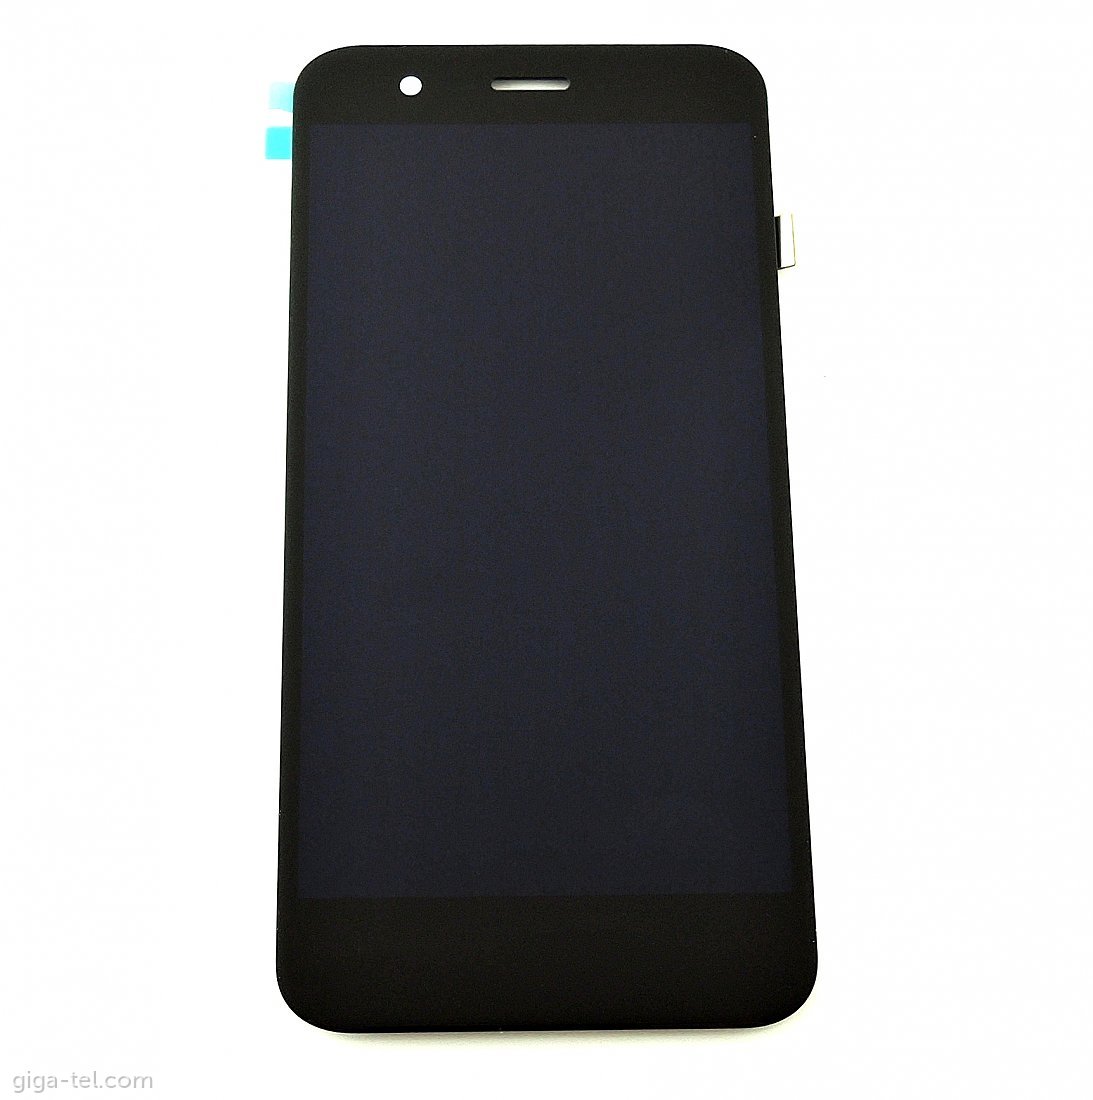 Vodafone Smart Prime 7 LCD+touch black